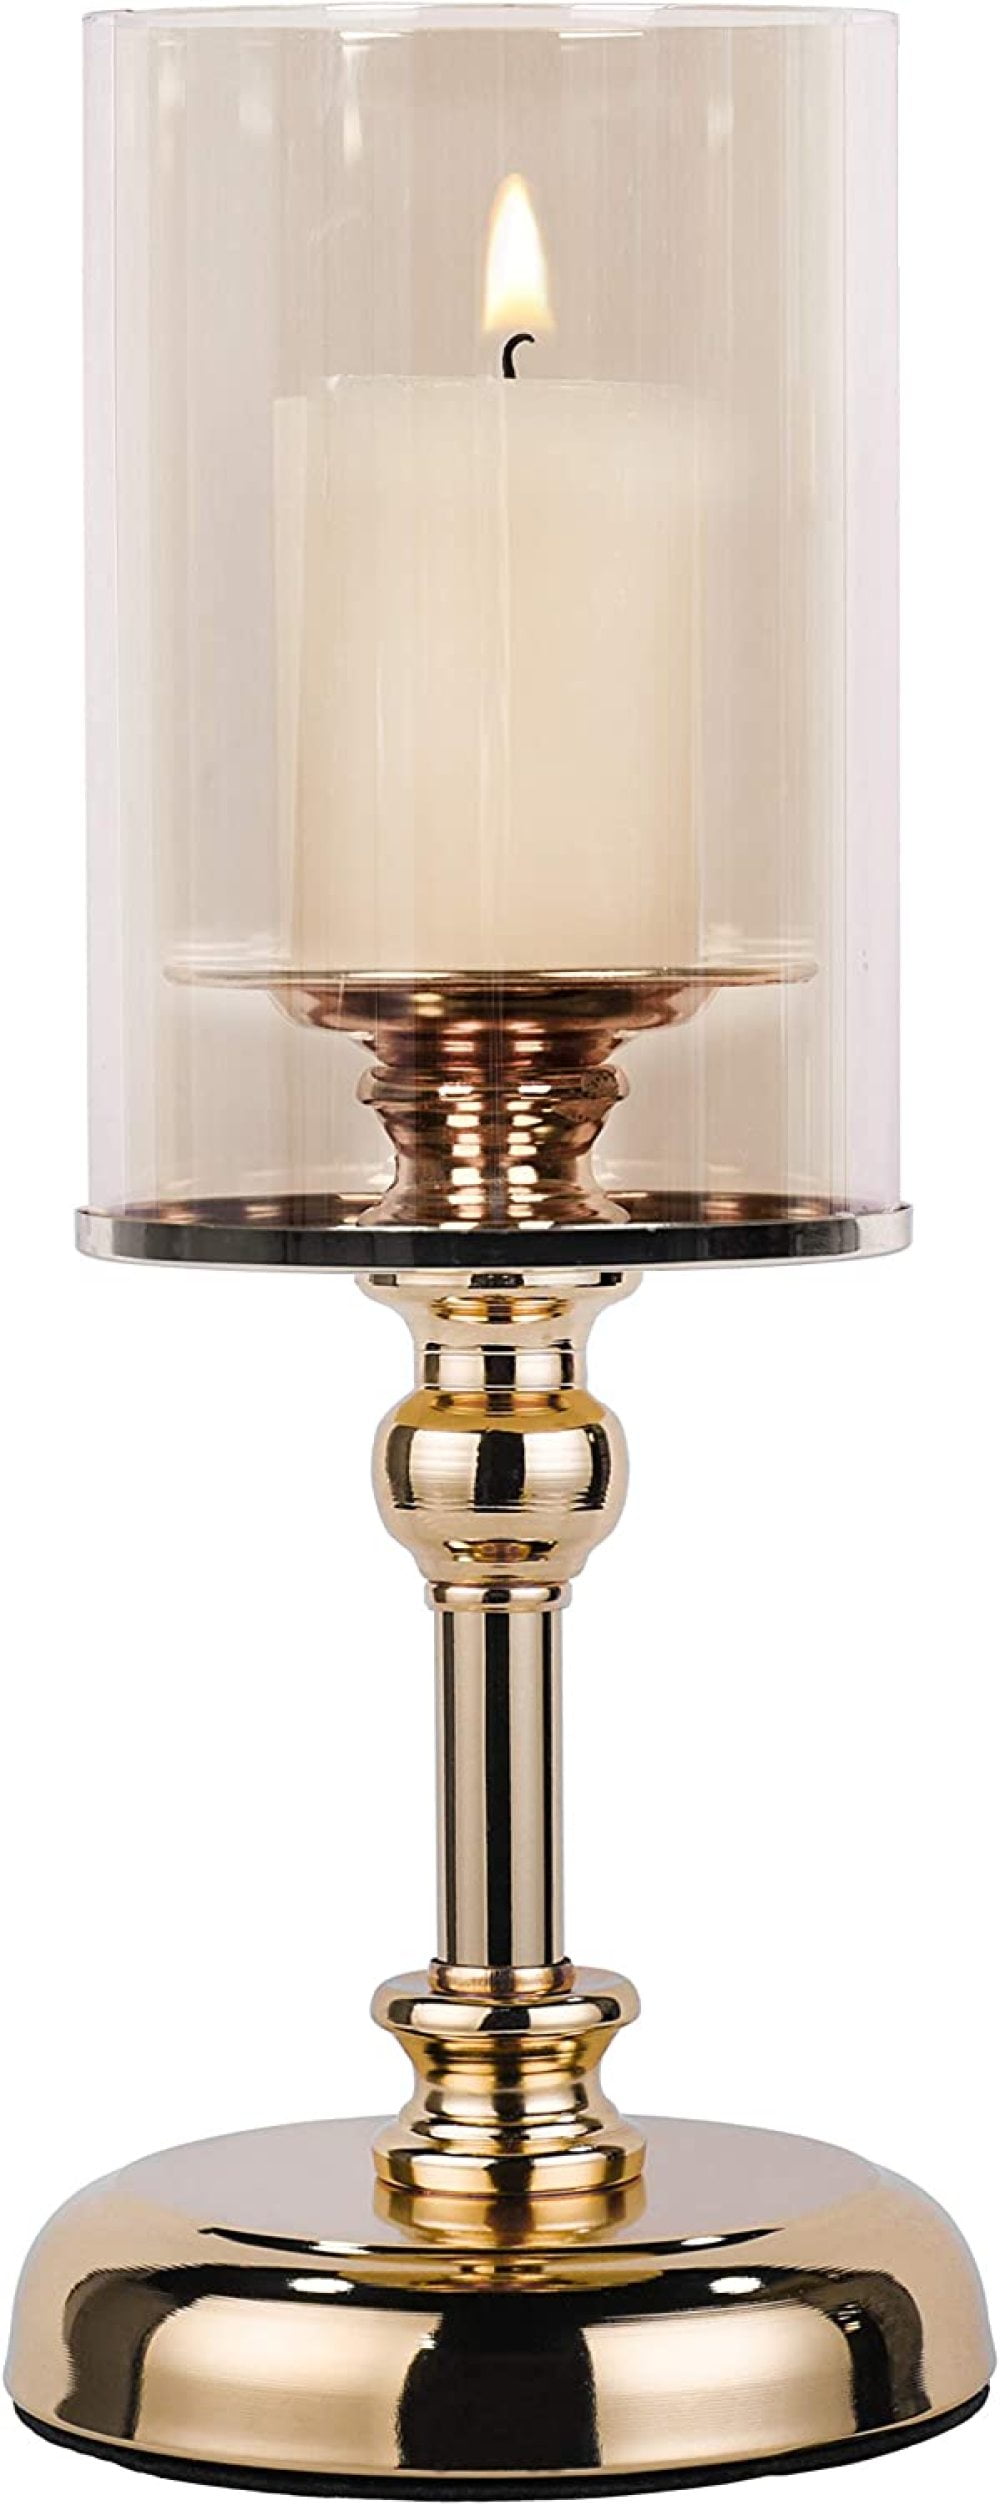 Gold Hurricane Big Hurricane Candle Holder Gold Pillar Candle Holder Premium Gold Glass Pillar Holder with Deluxe Design 